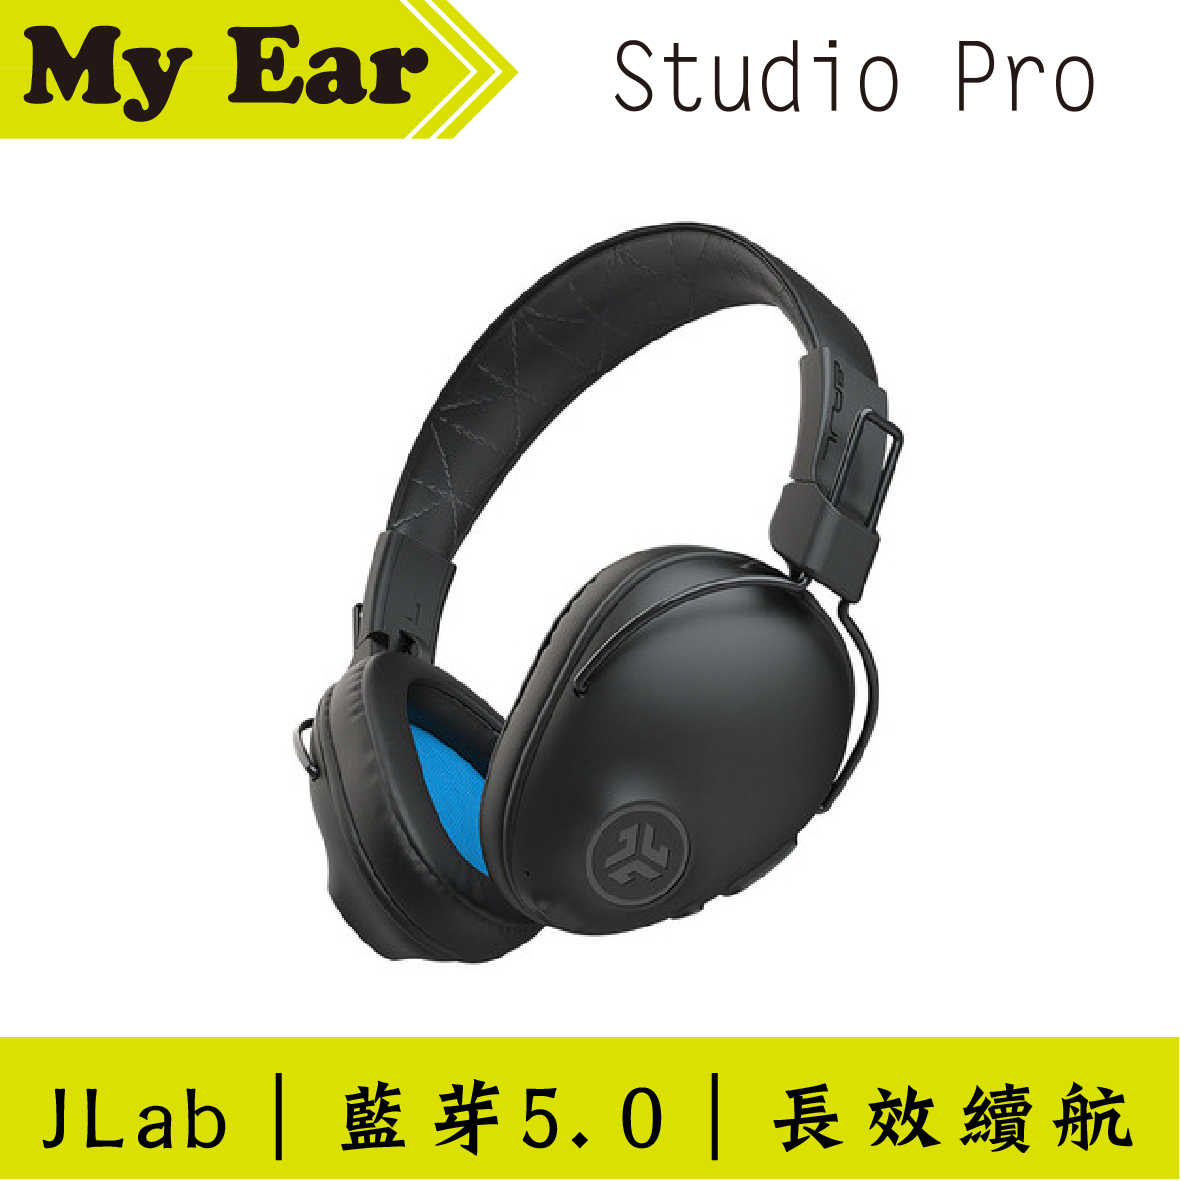 JLab Studio Pro 強續航力 藍芽5.0 耳罩式 藍芽耳機 | My Ear 耳機專門店